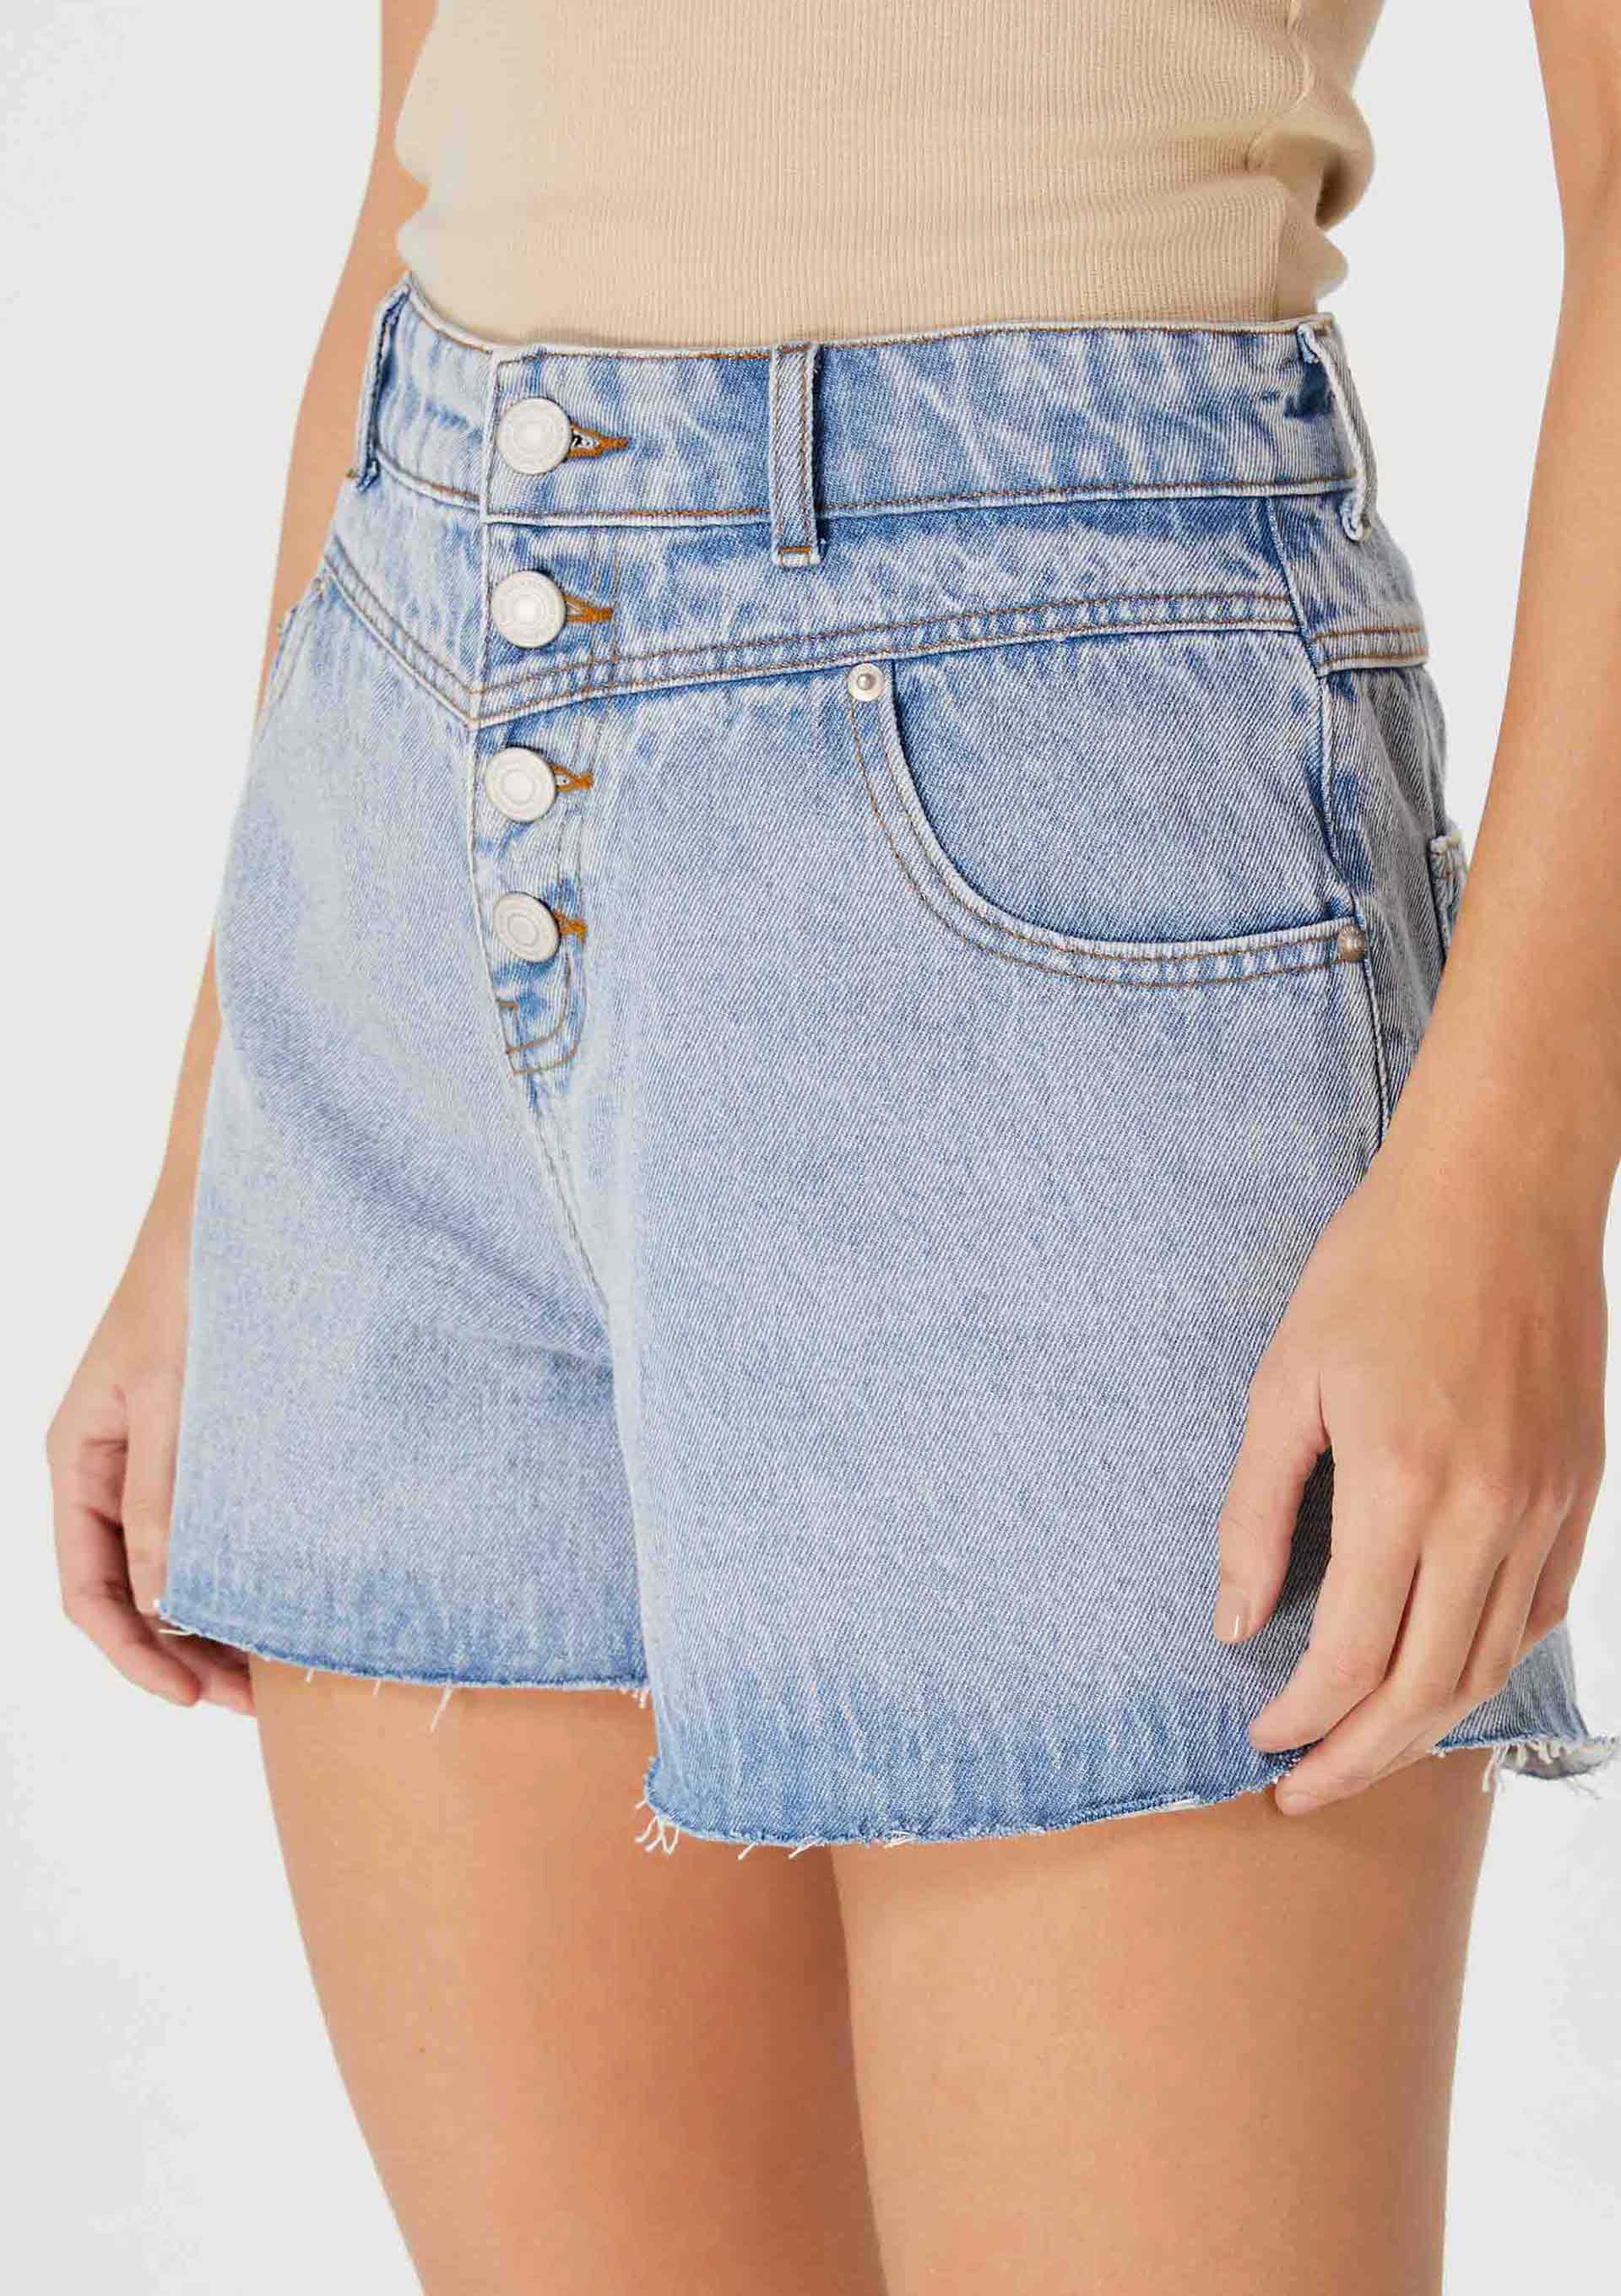 Shorts Jeans Feminino Básicos do Brasil - Hering Store